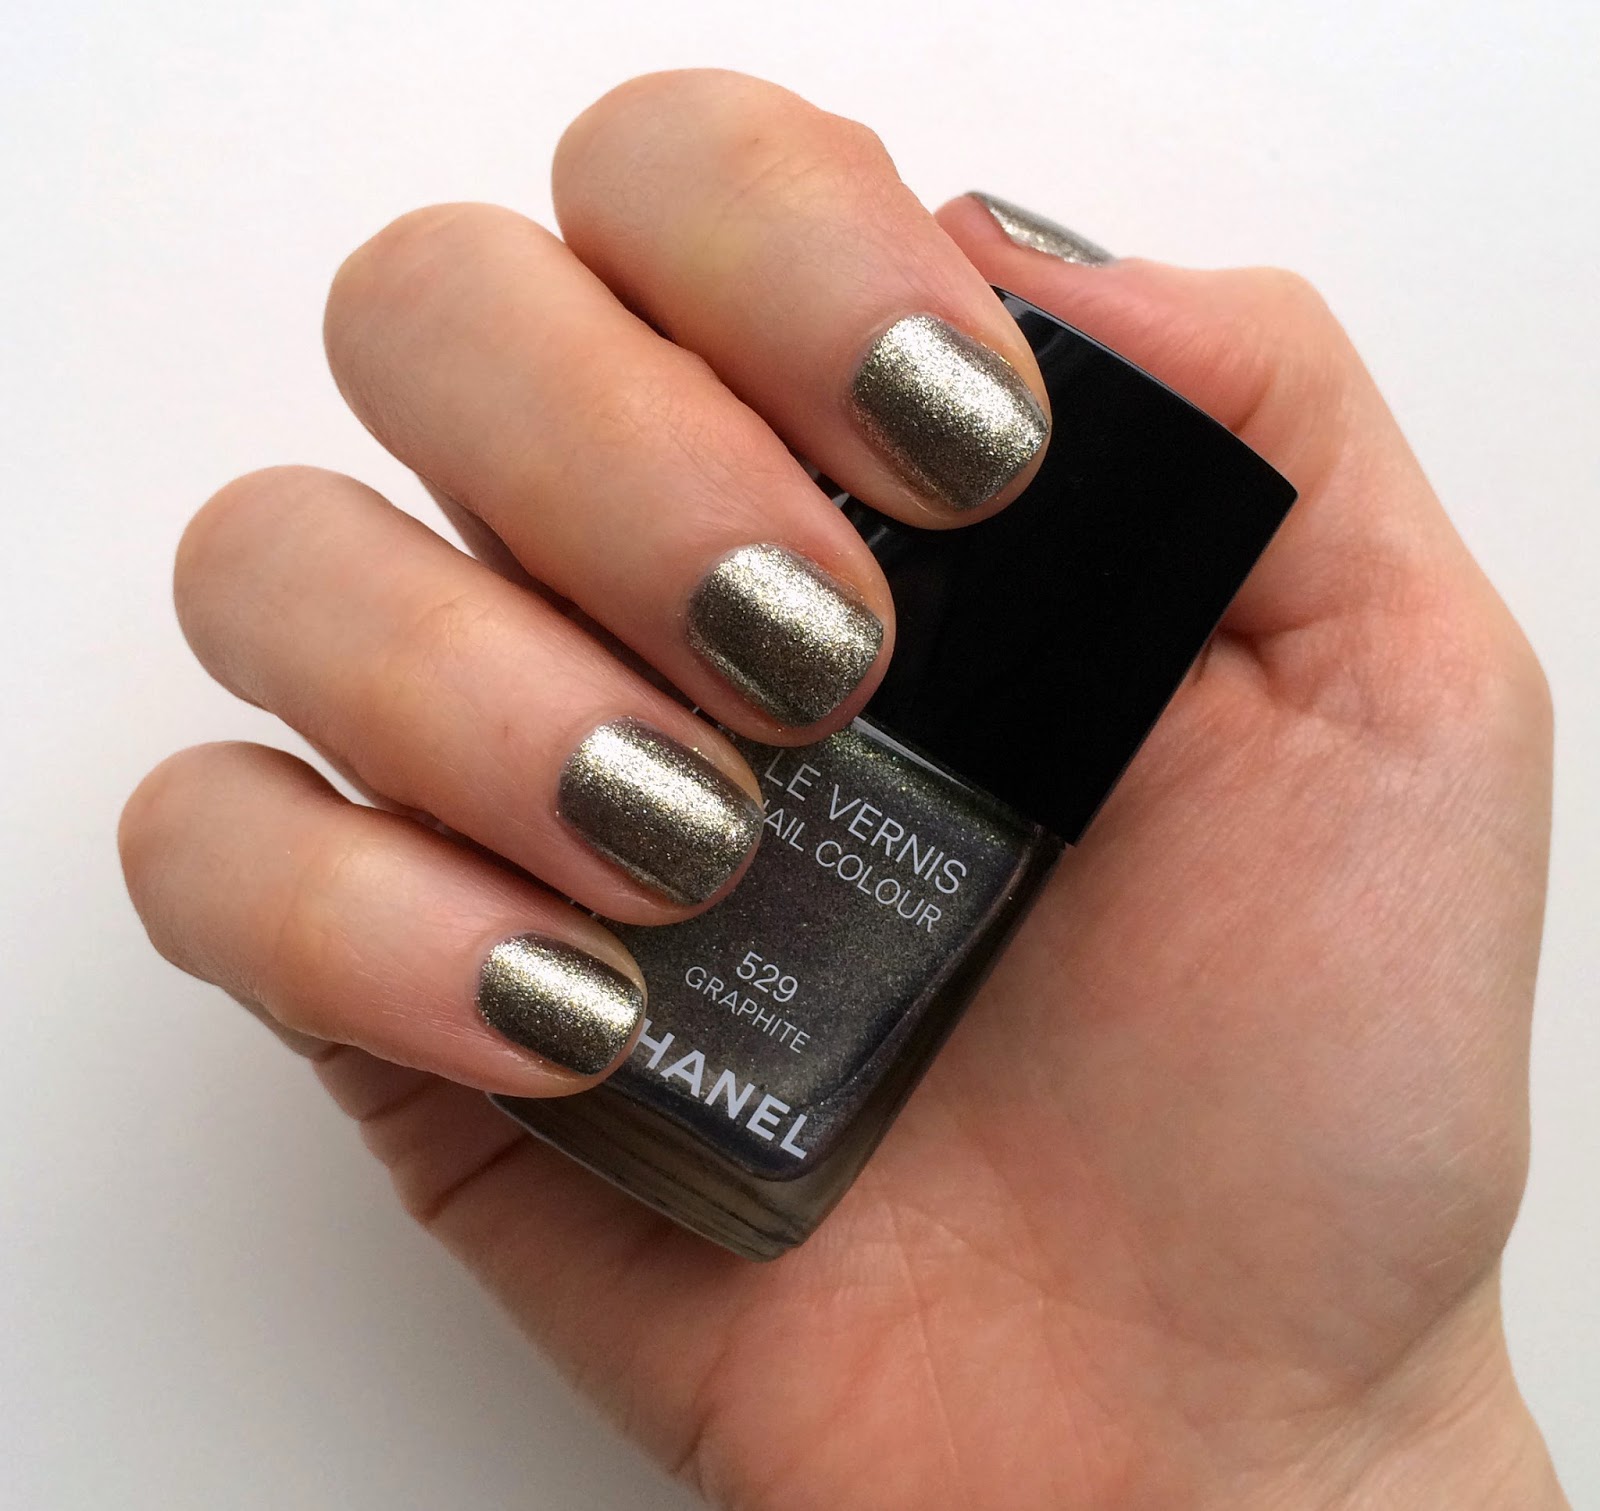 Chanel Graphite nail polish review